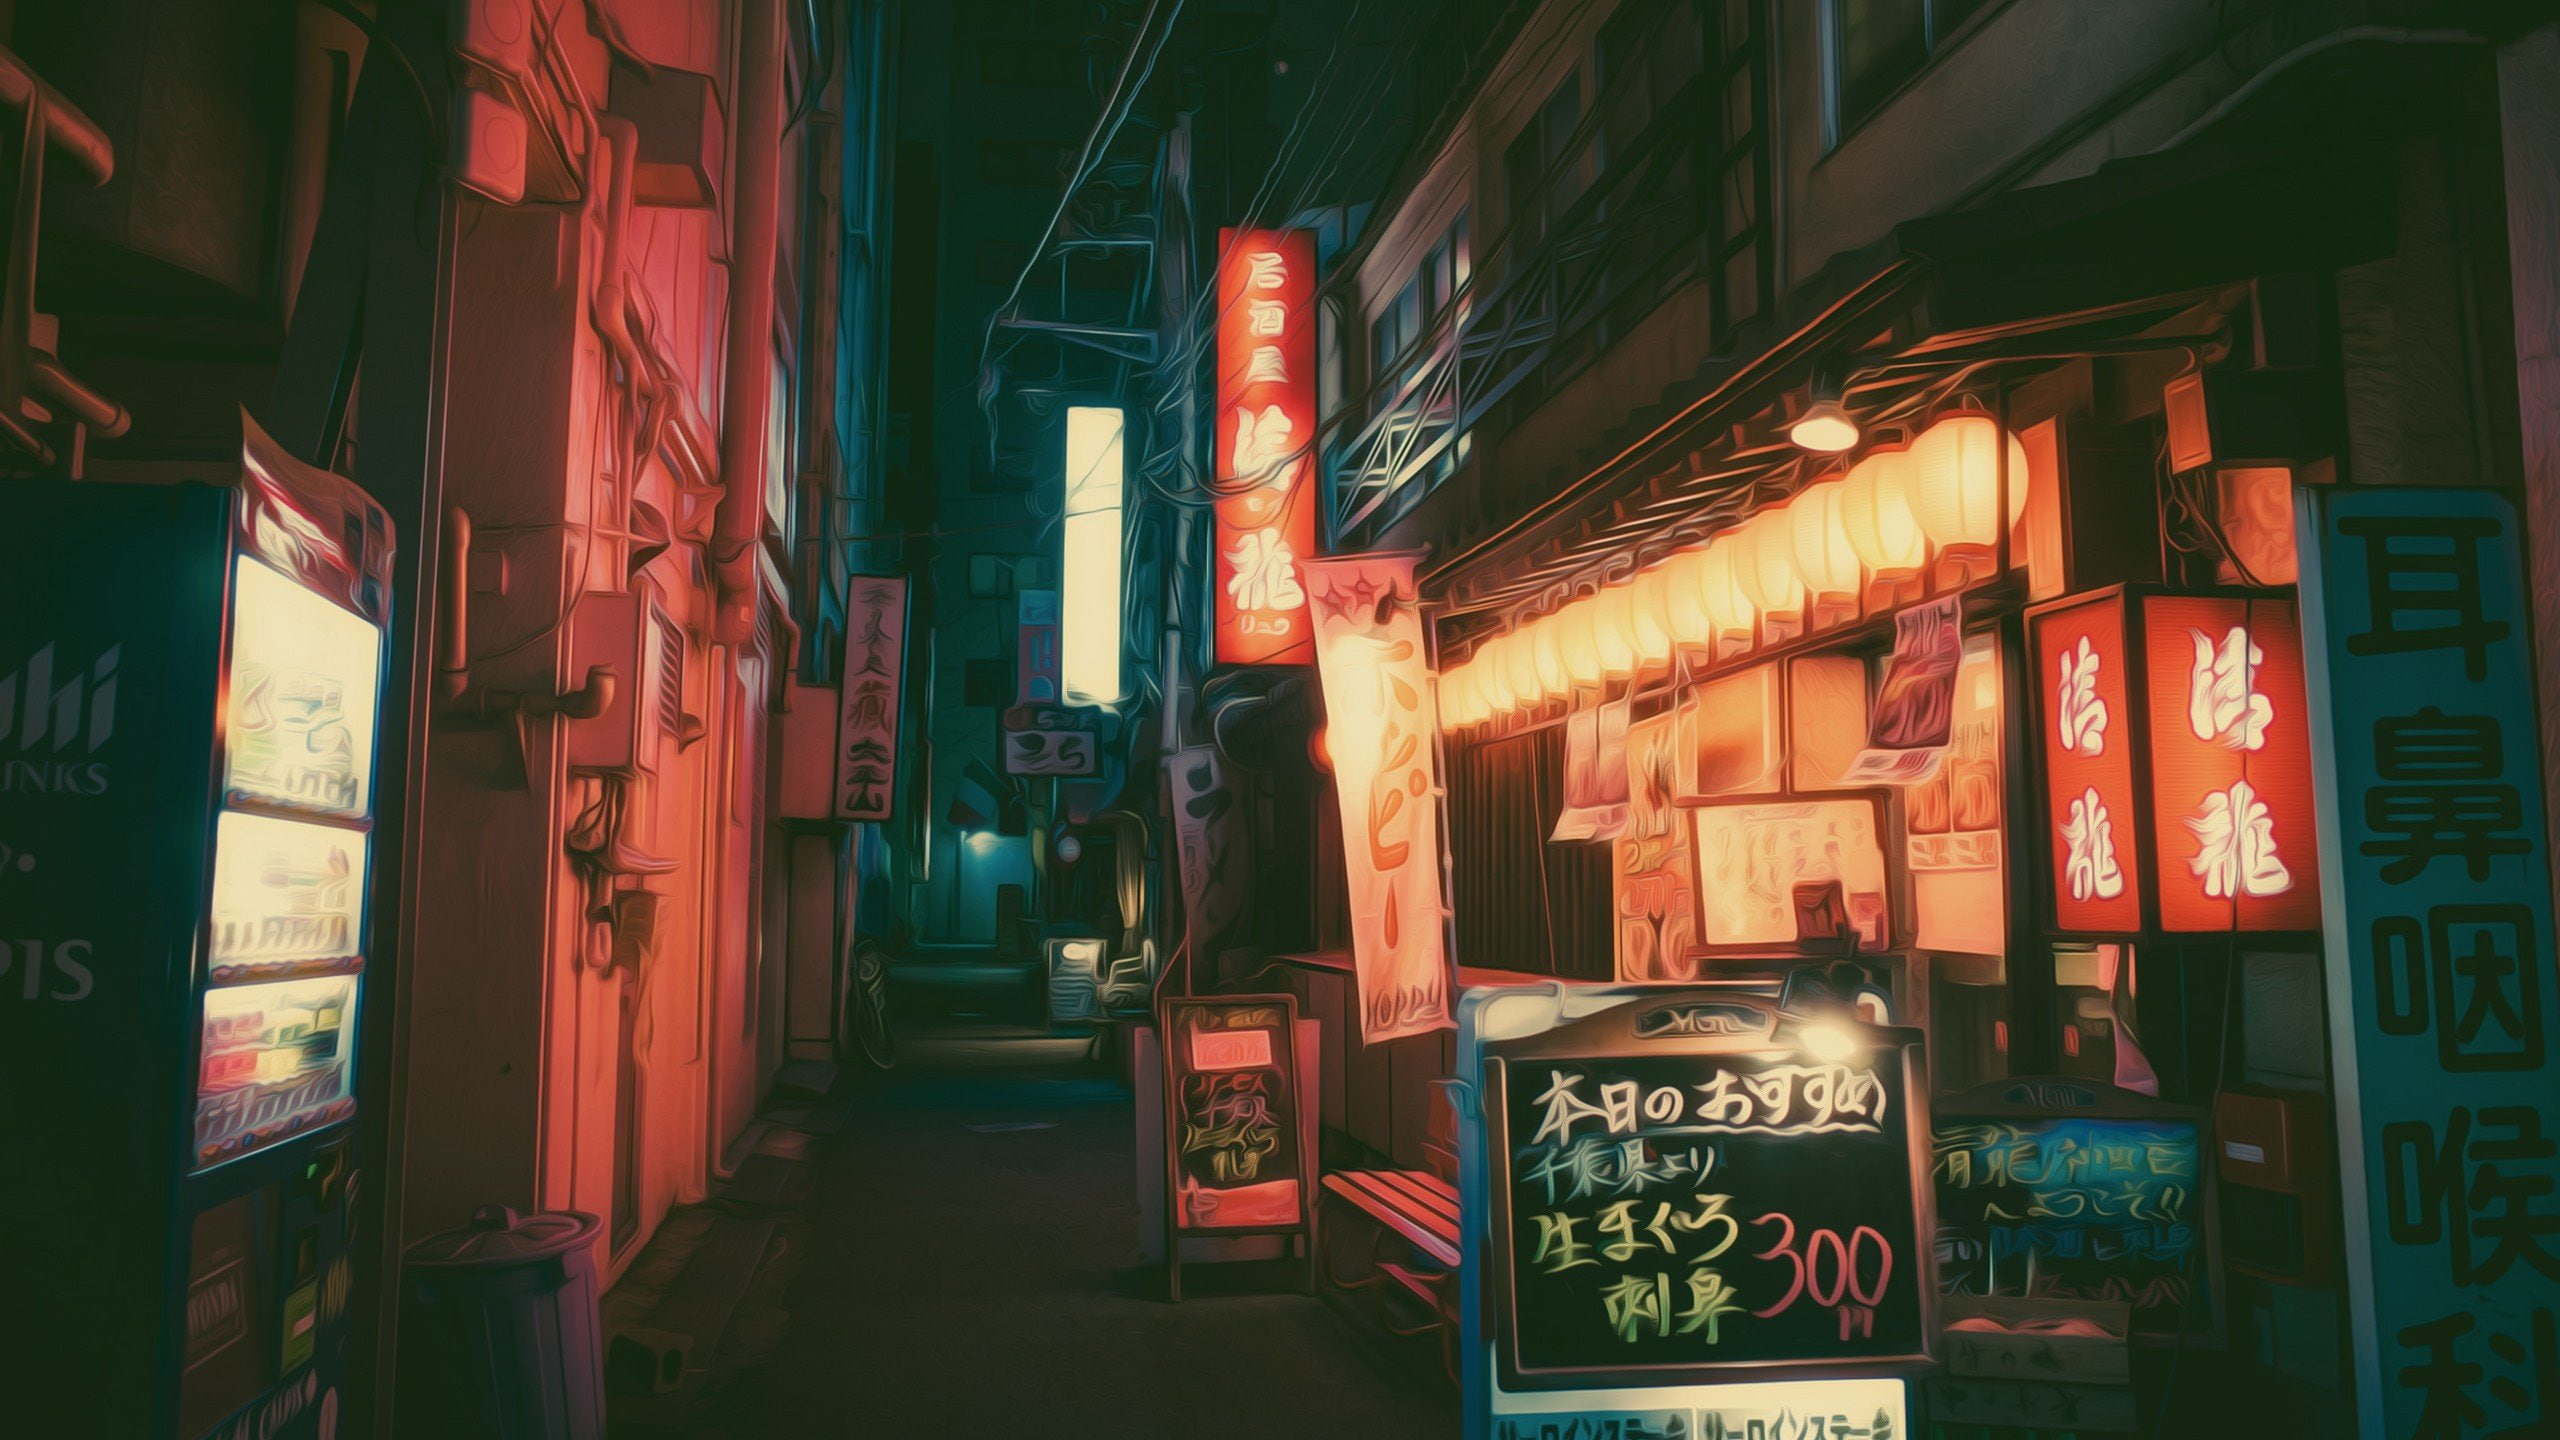 Masashi Wakui, Neon lights, Photo Manipulation, photography